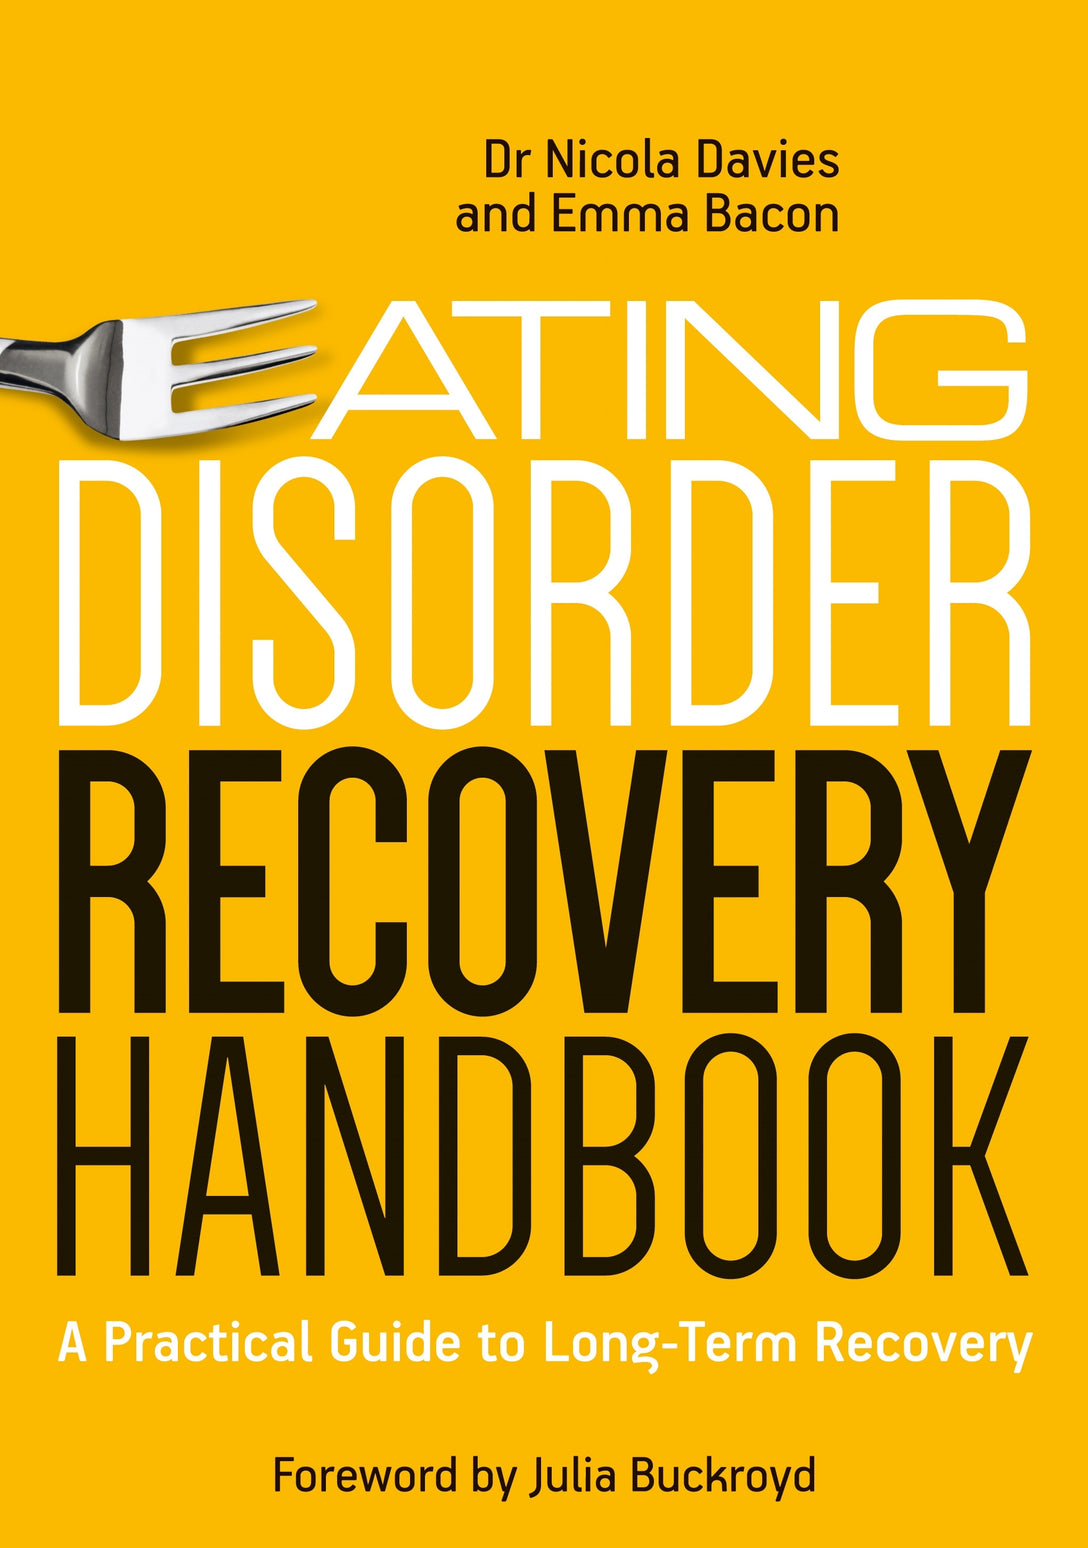 Eating Disorder Recovery Handbook by Nicola Davies, Emma Bacon